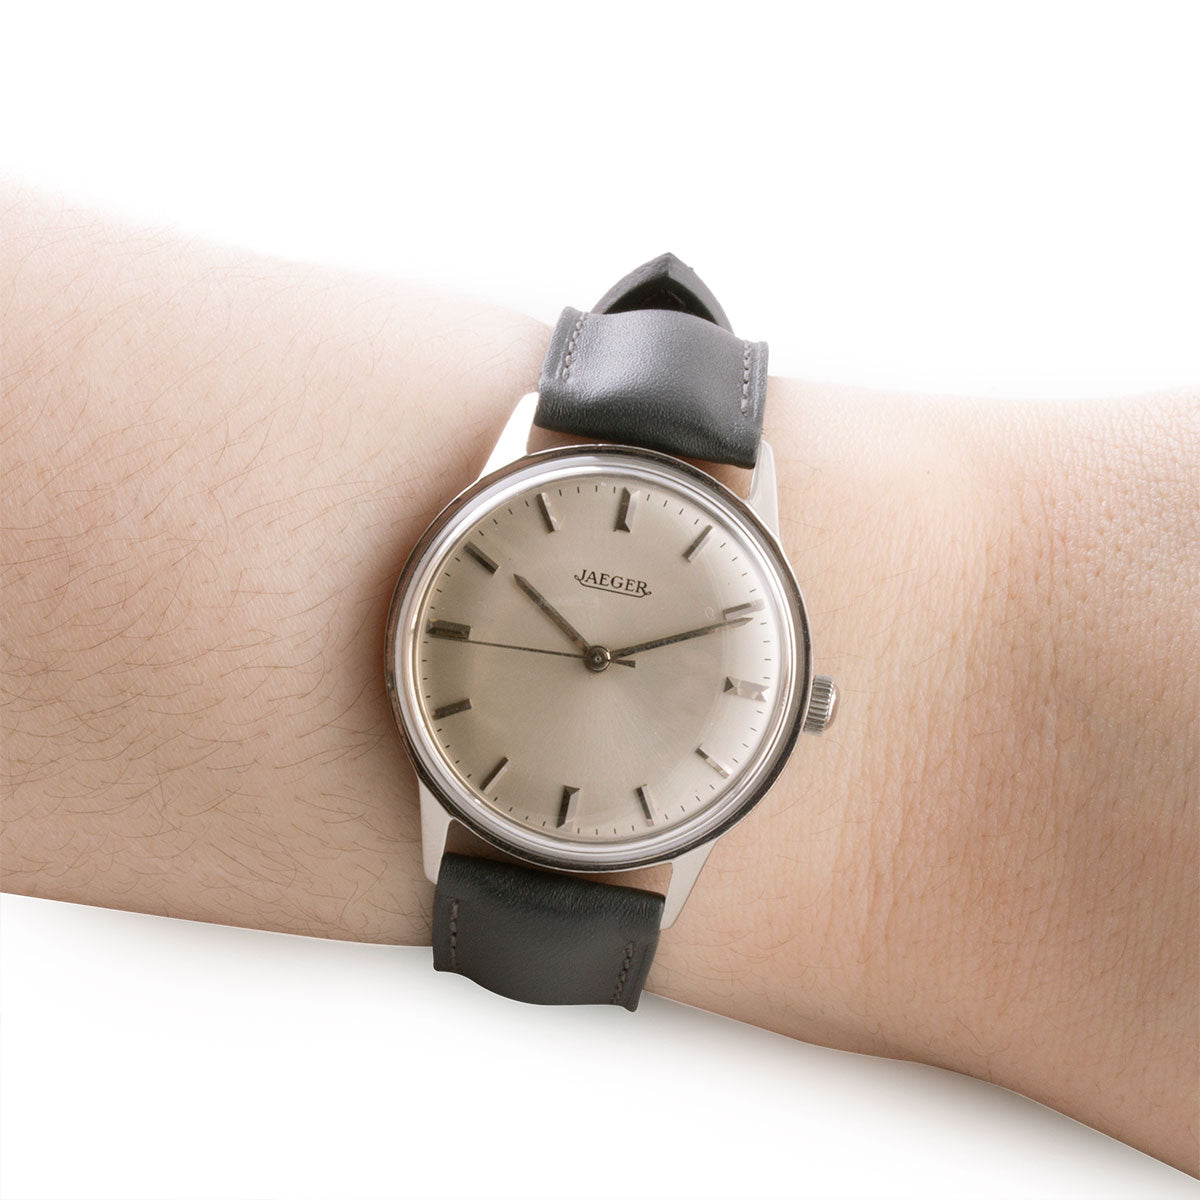 ​Second-hand watch - Jaeger - 2100€